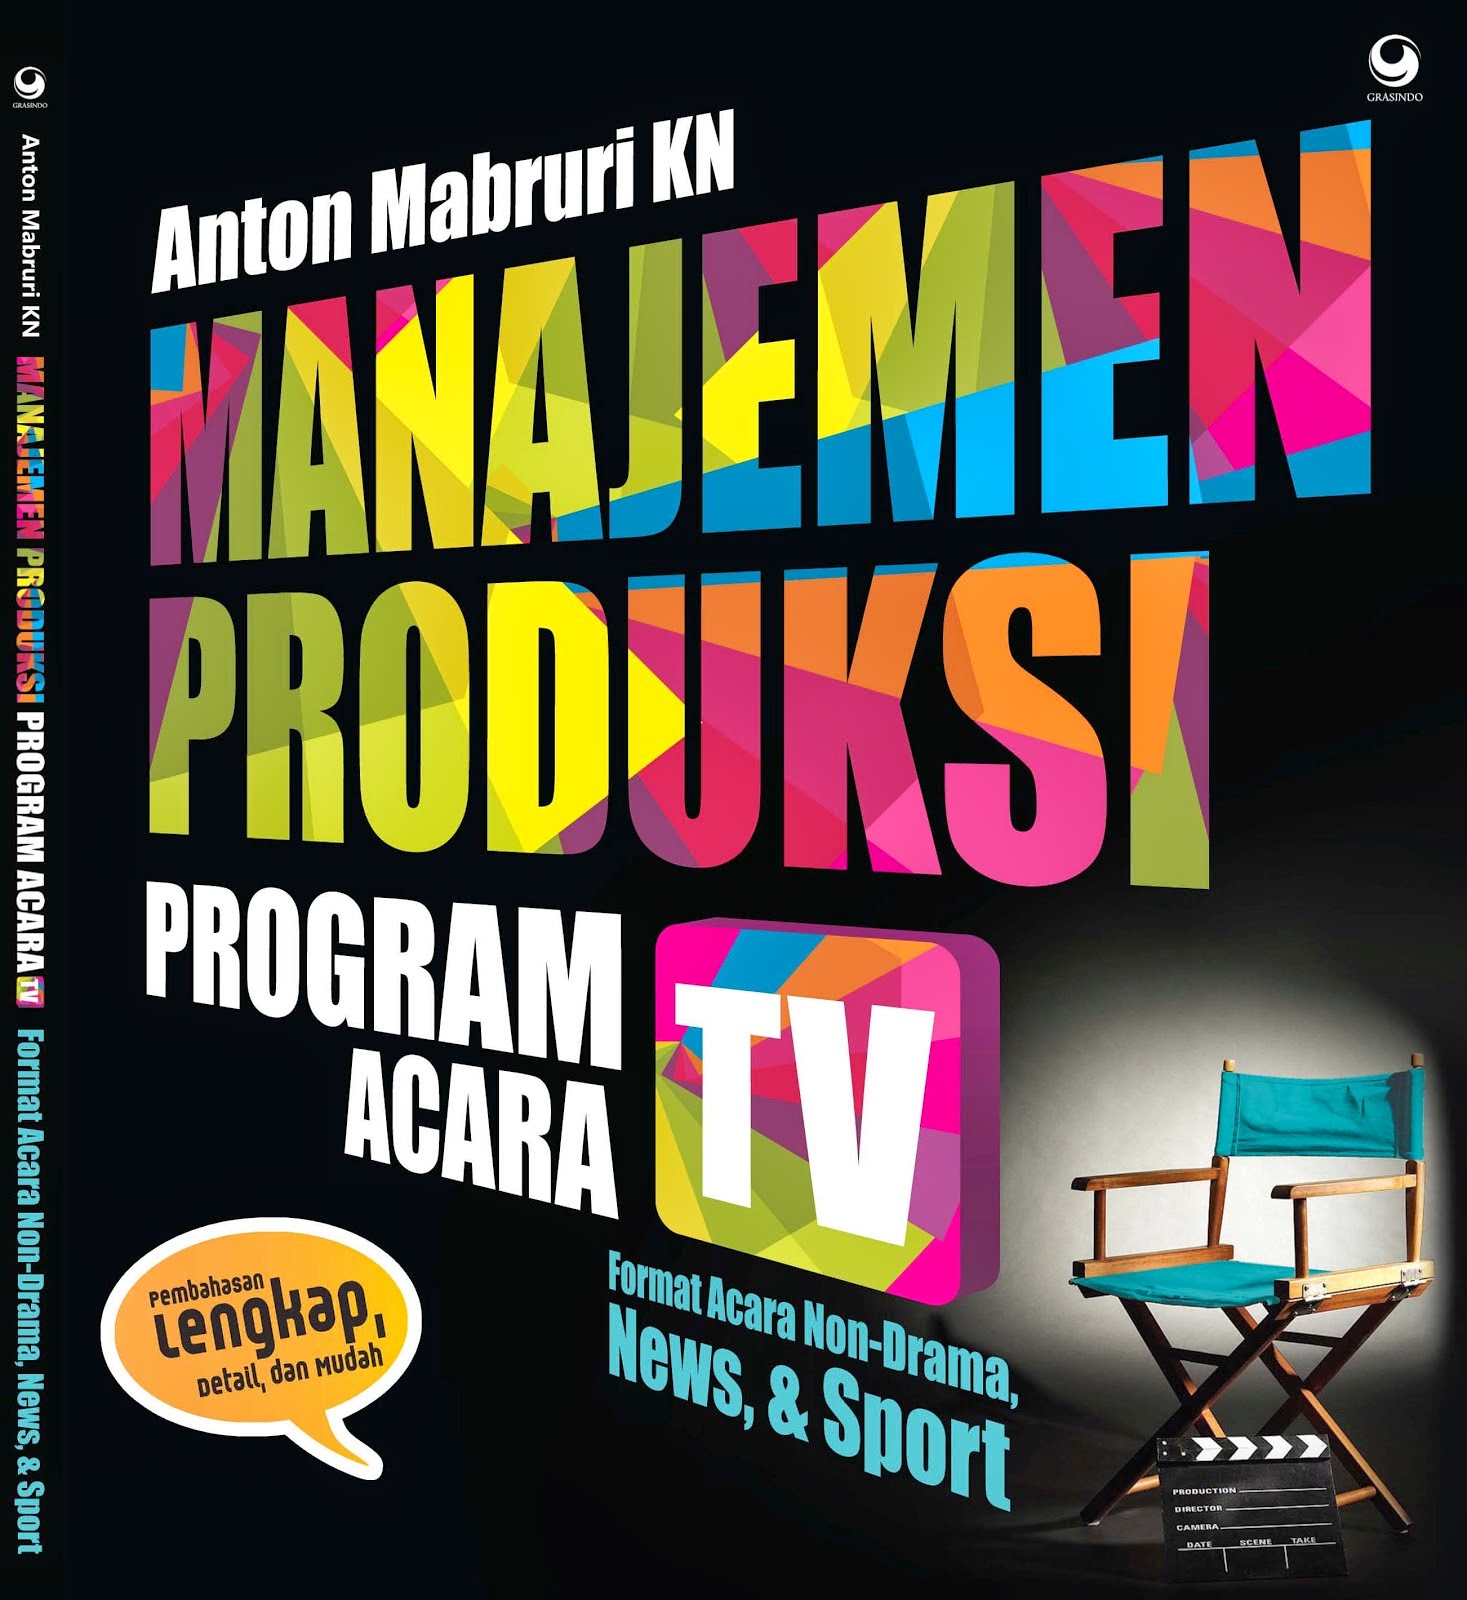 Manajemen produksi program acara televisi format acara non-drama, news, & sport